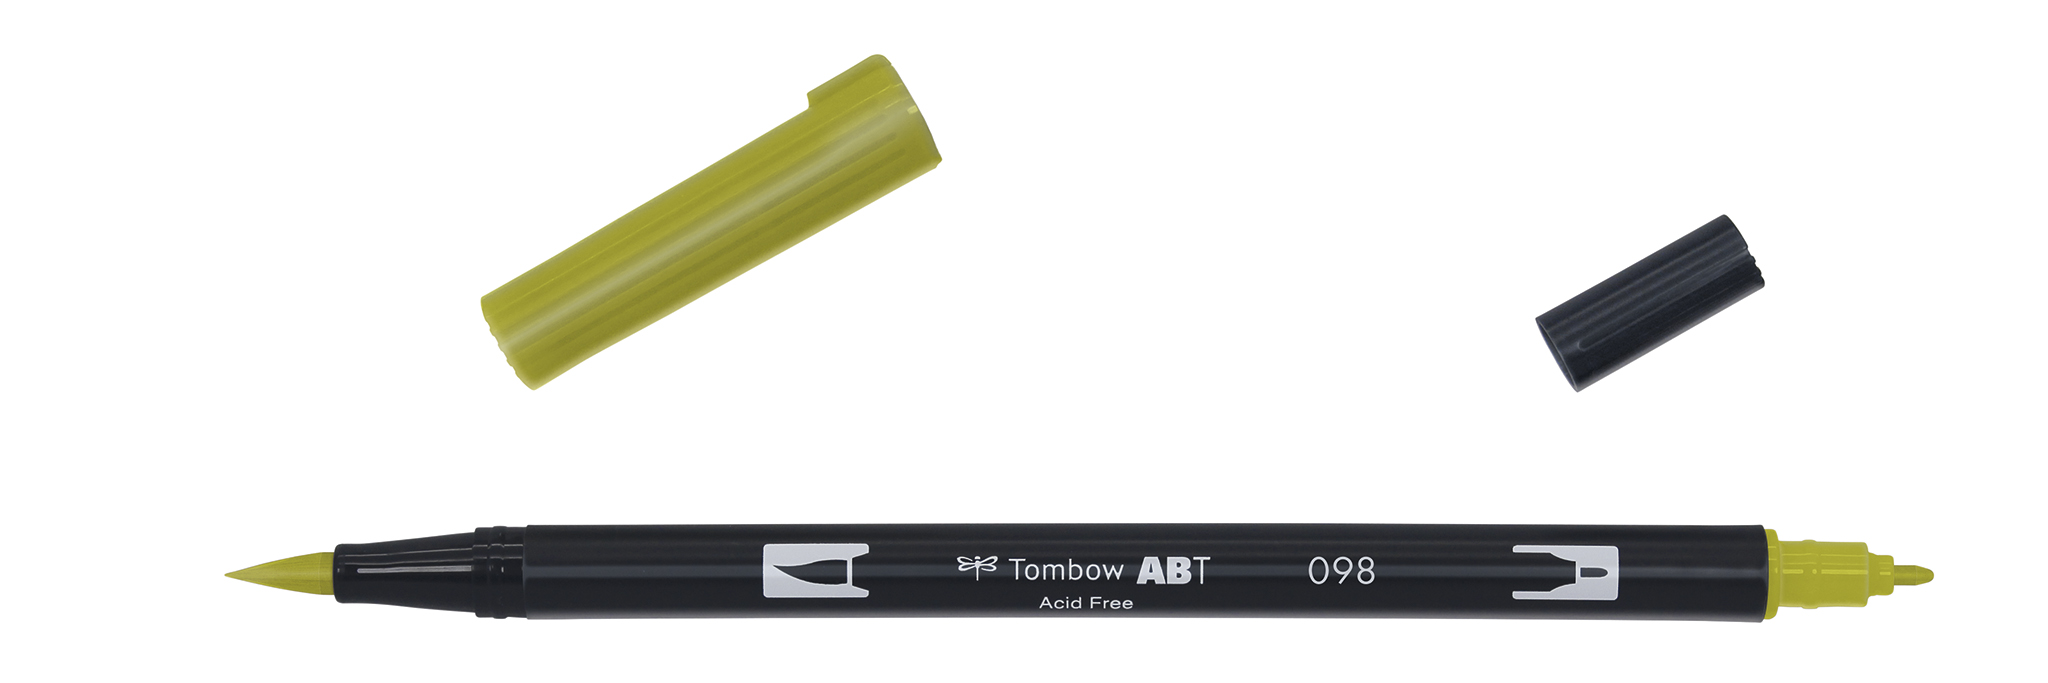 Tombow Art Brush Pen, avocado